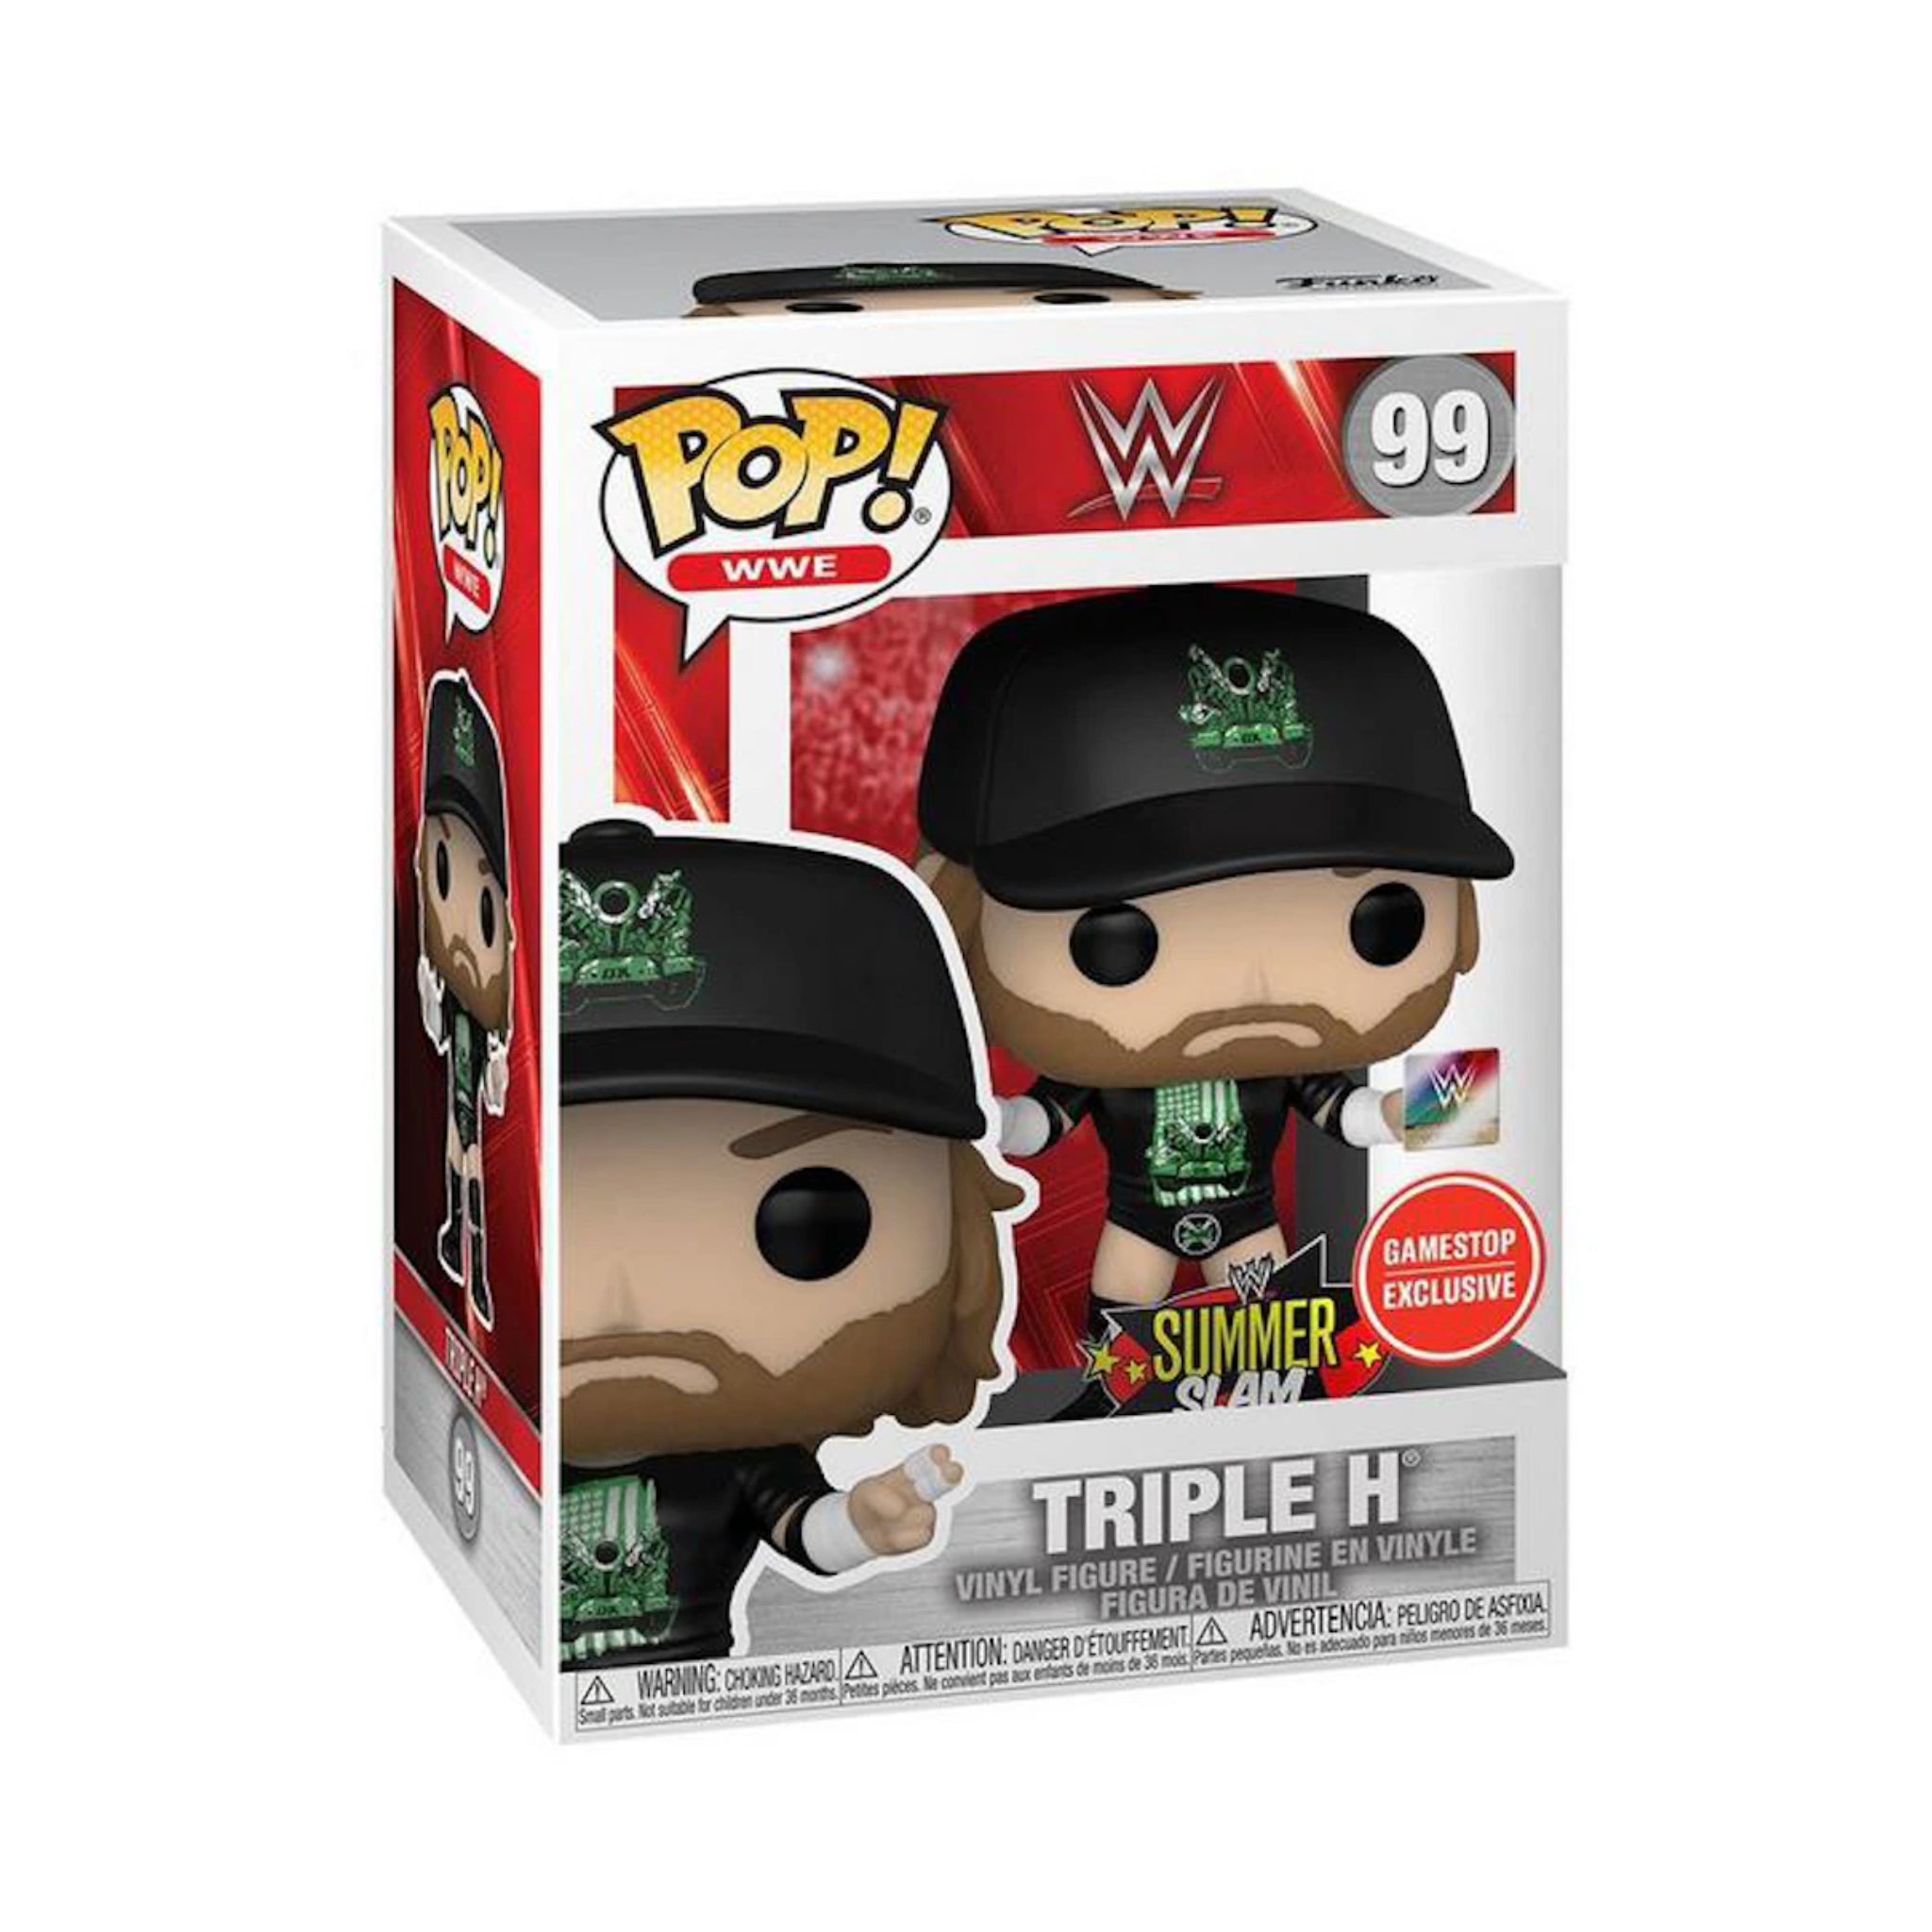 Triple H (SUMMER SLAM) Funko Pop! GAMESTOP EXCLUSIVE